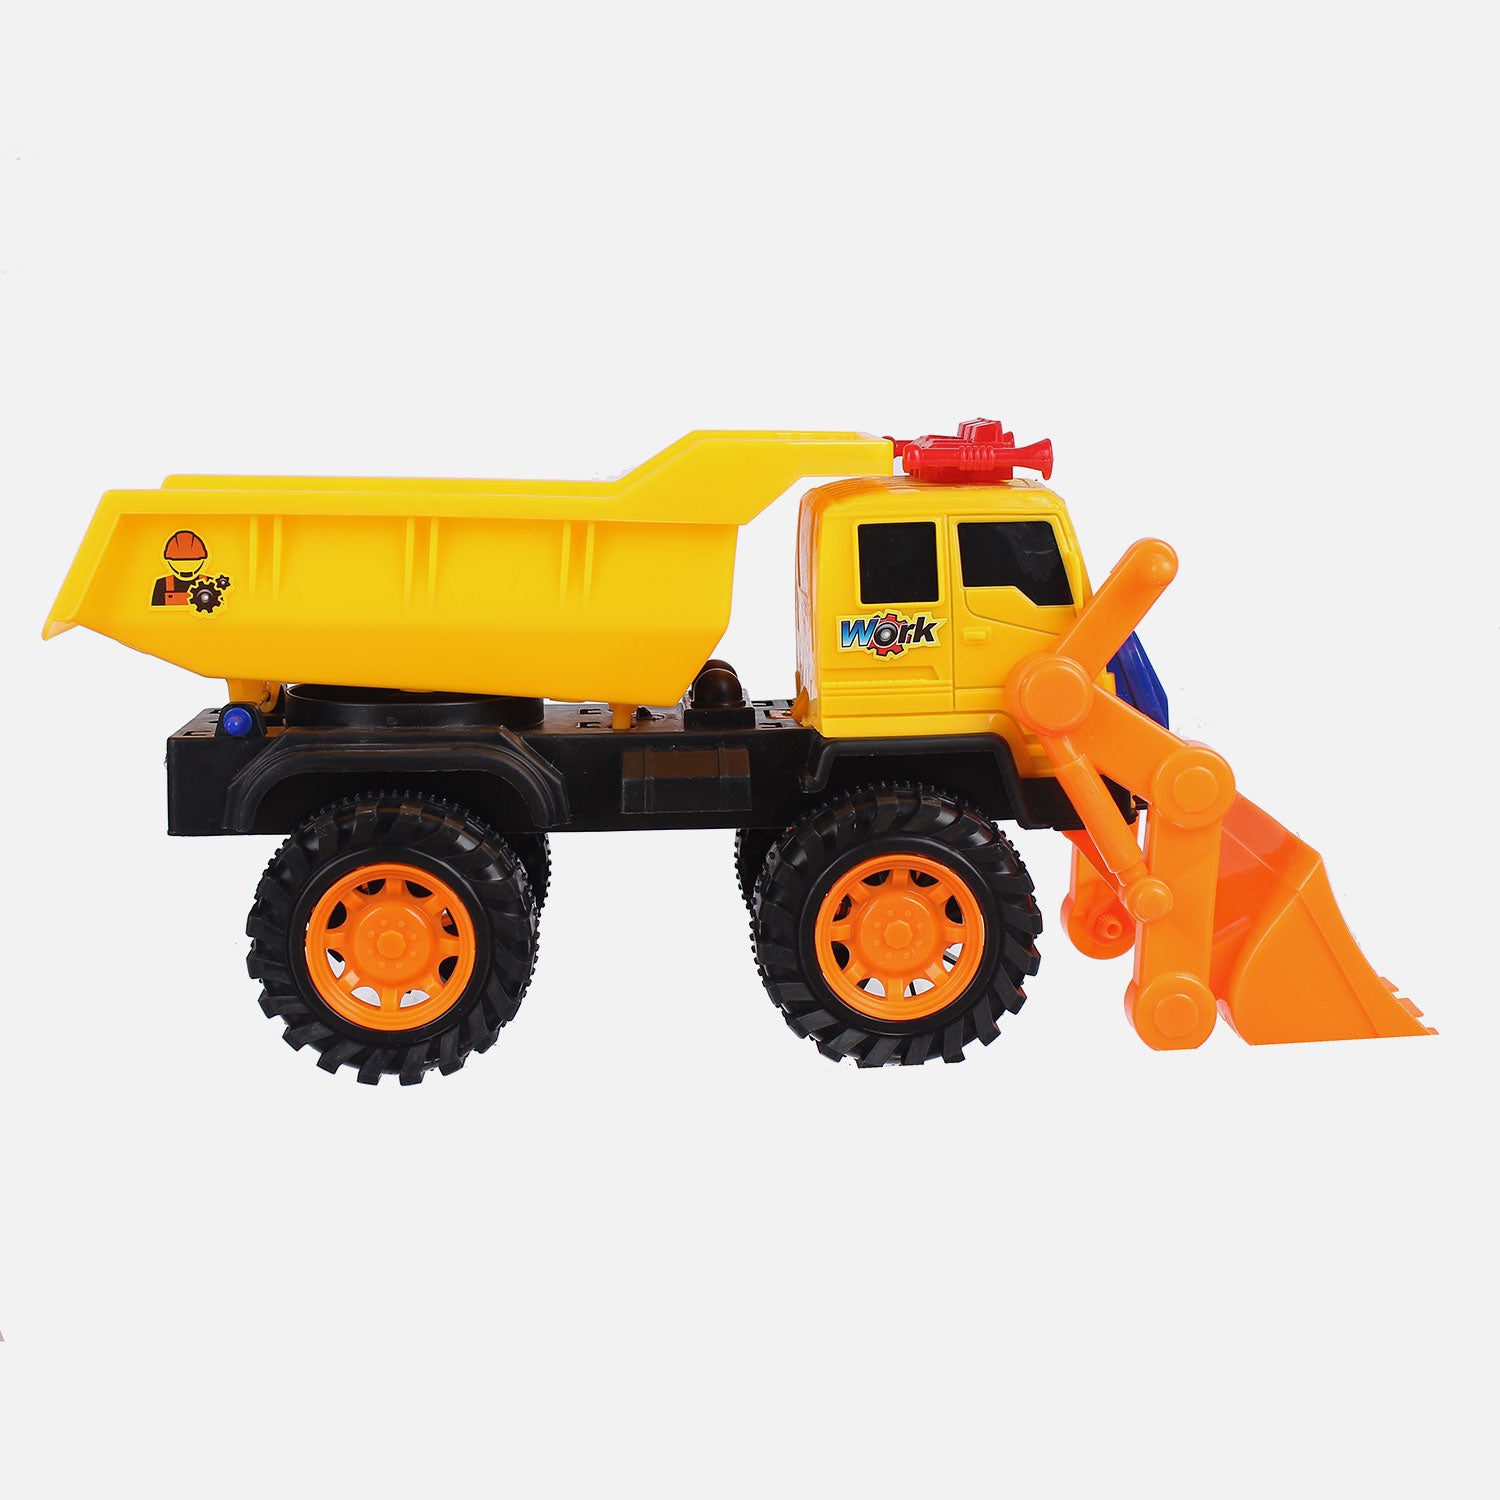 Excavator toy for kid